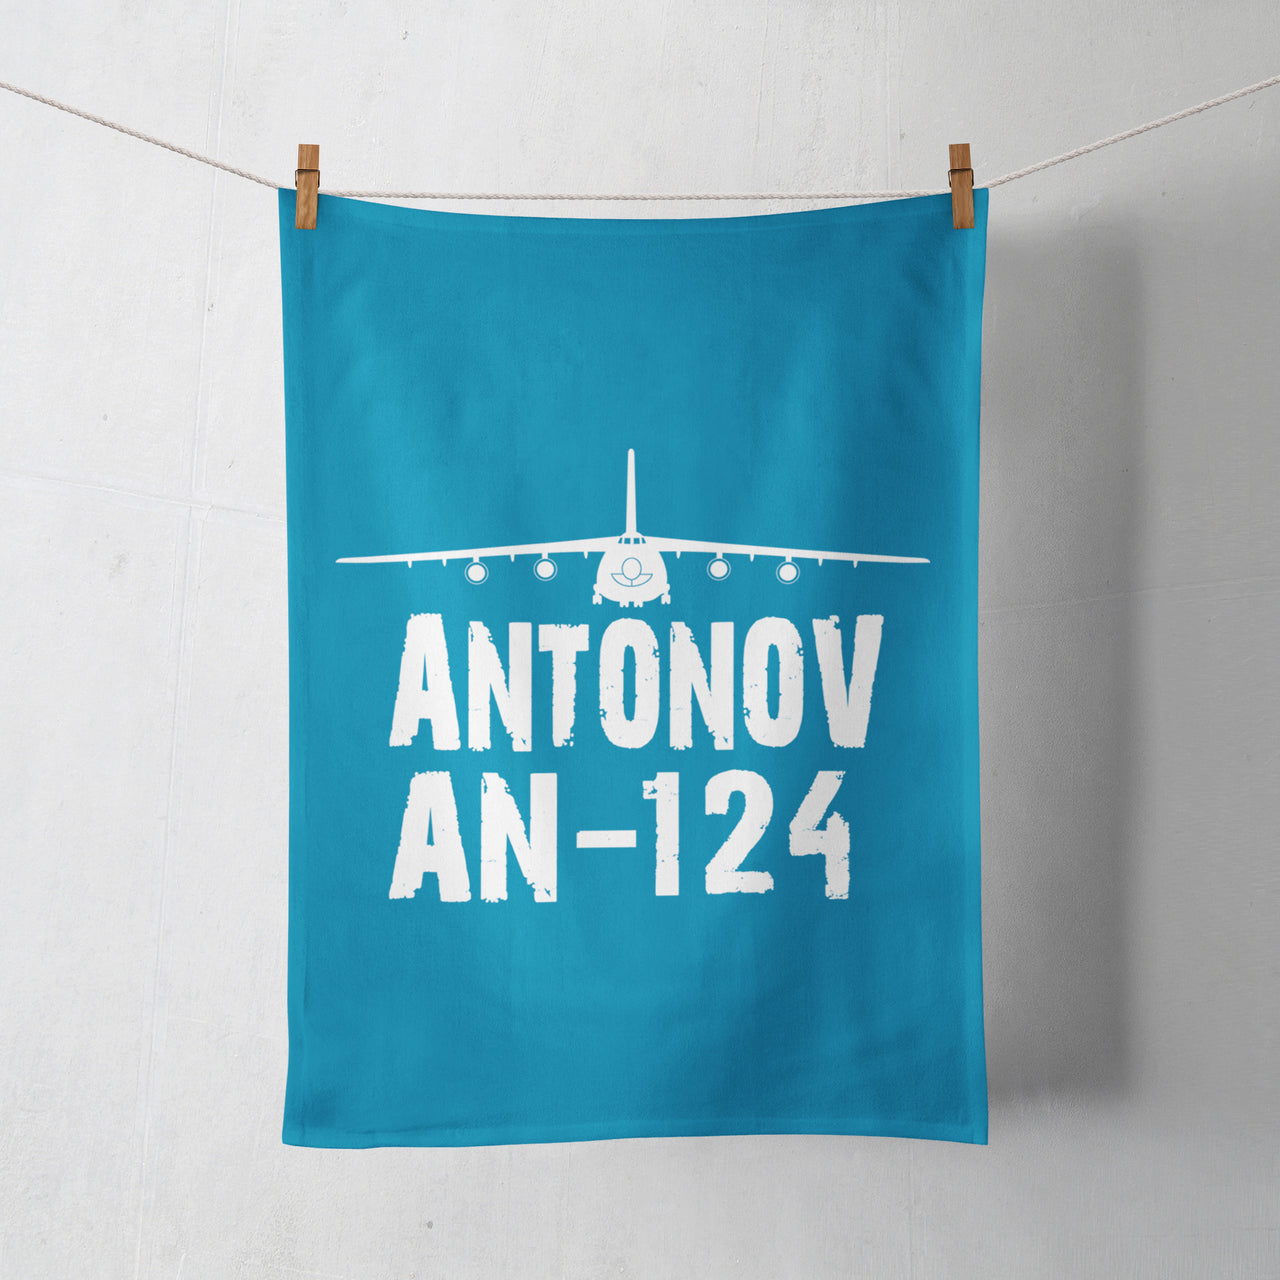 Antonov AN-124 & Plane Designed Towels